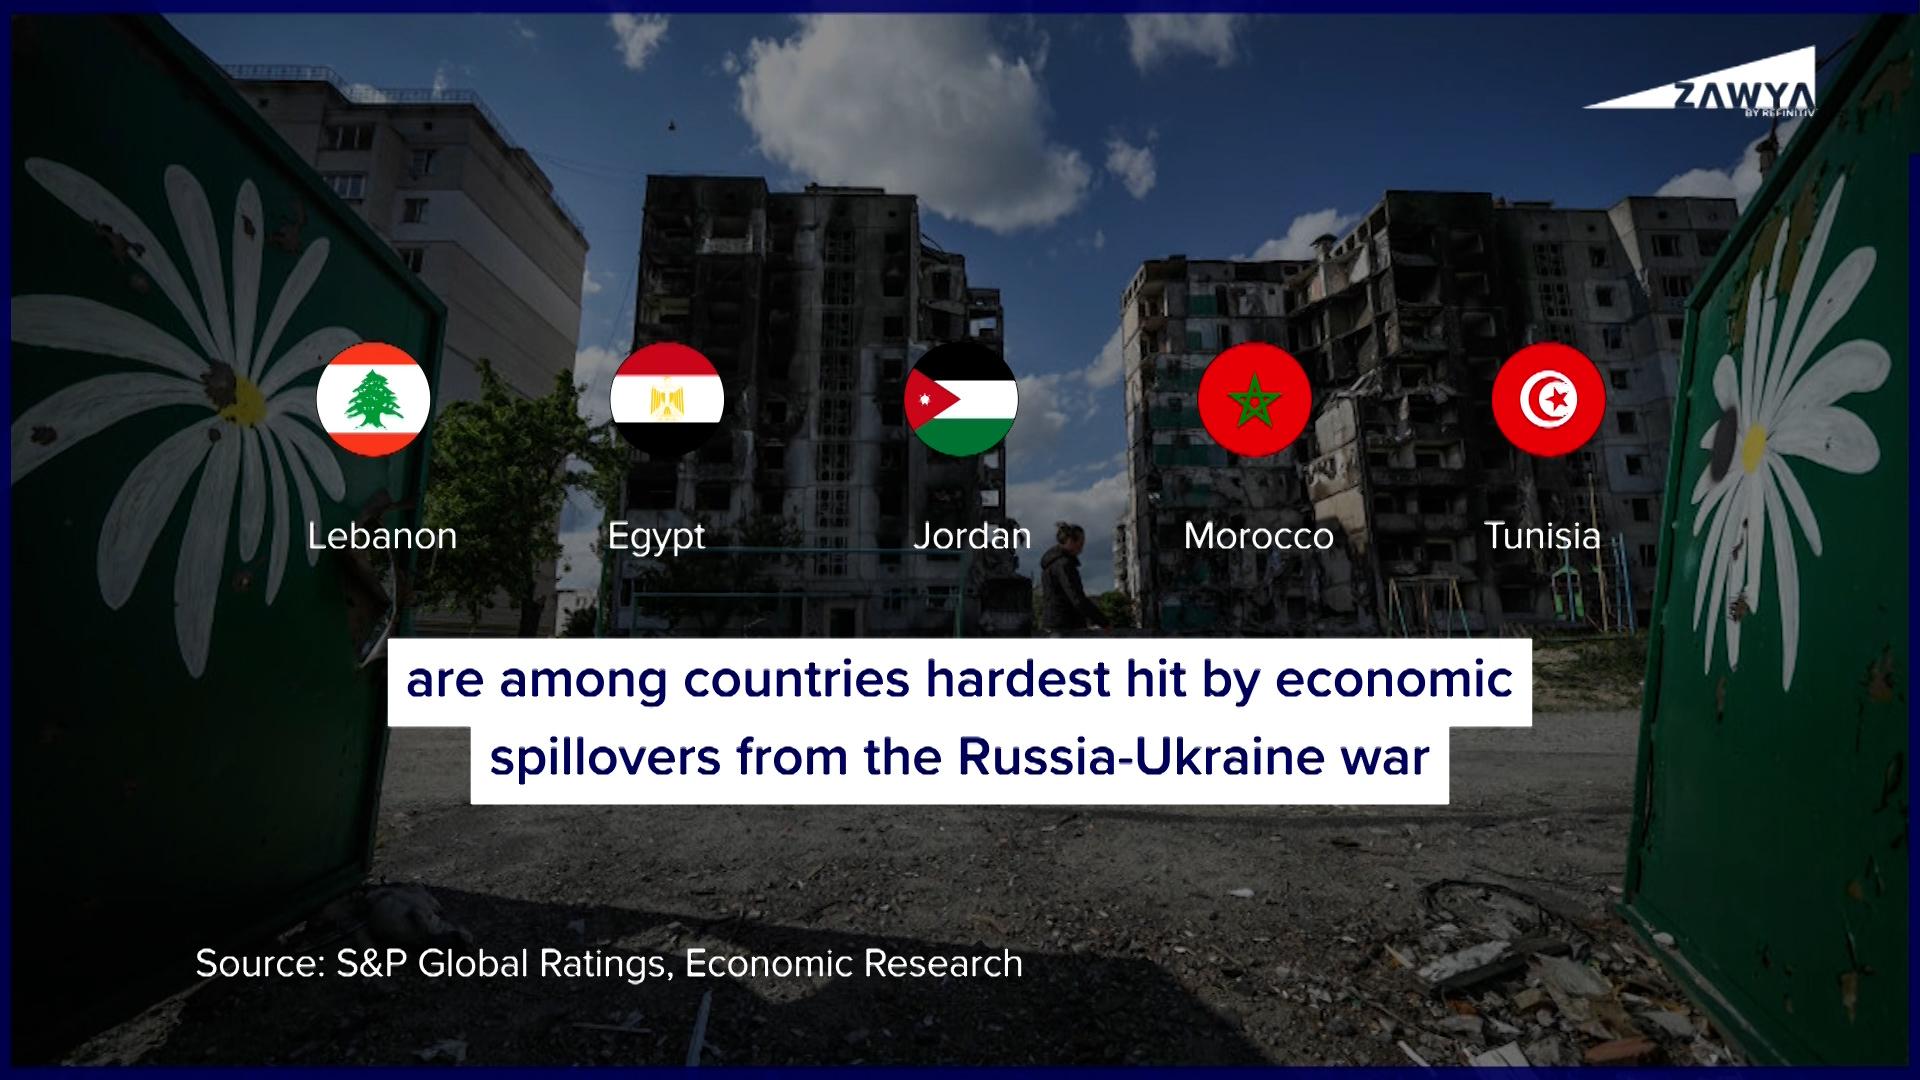 Five MENA countries hit hardest by Russia-Ukraine war